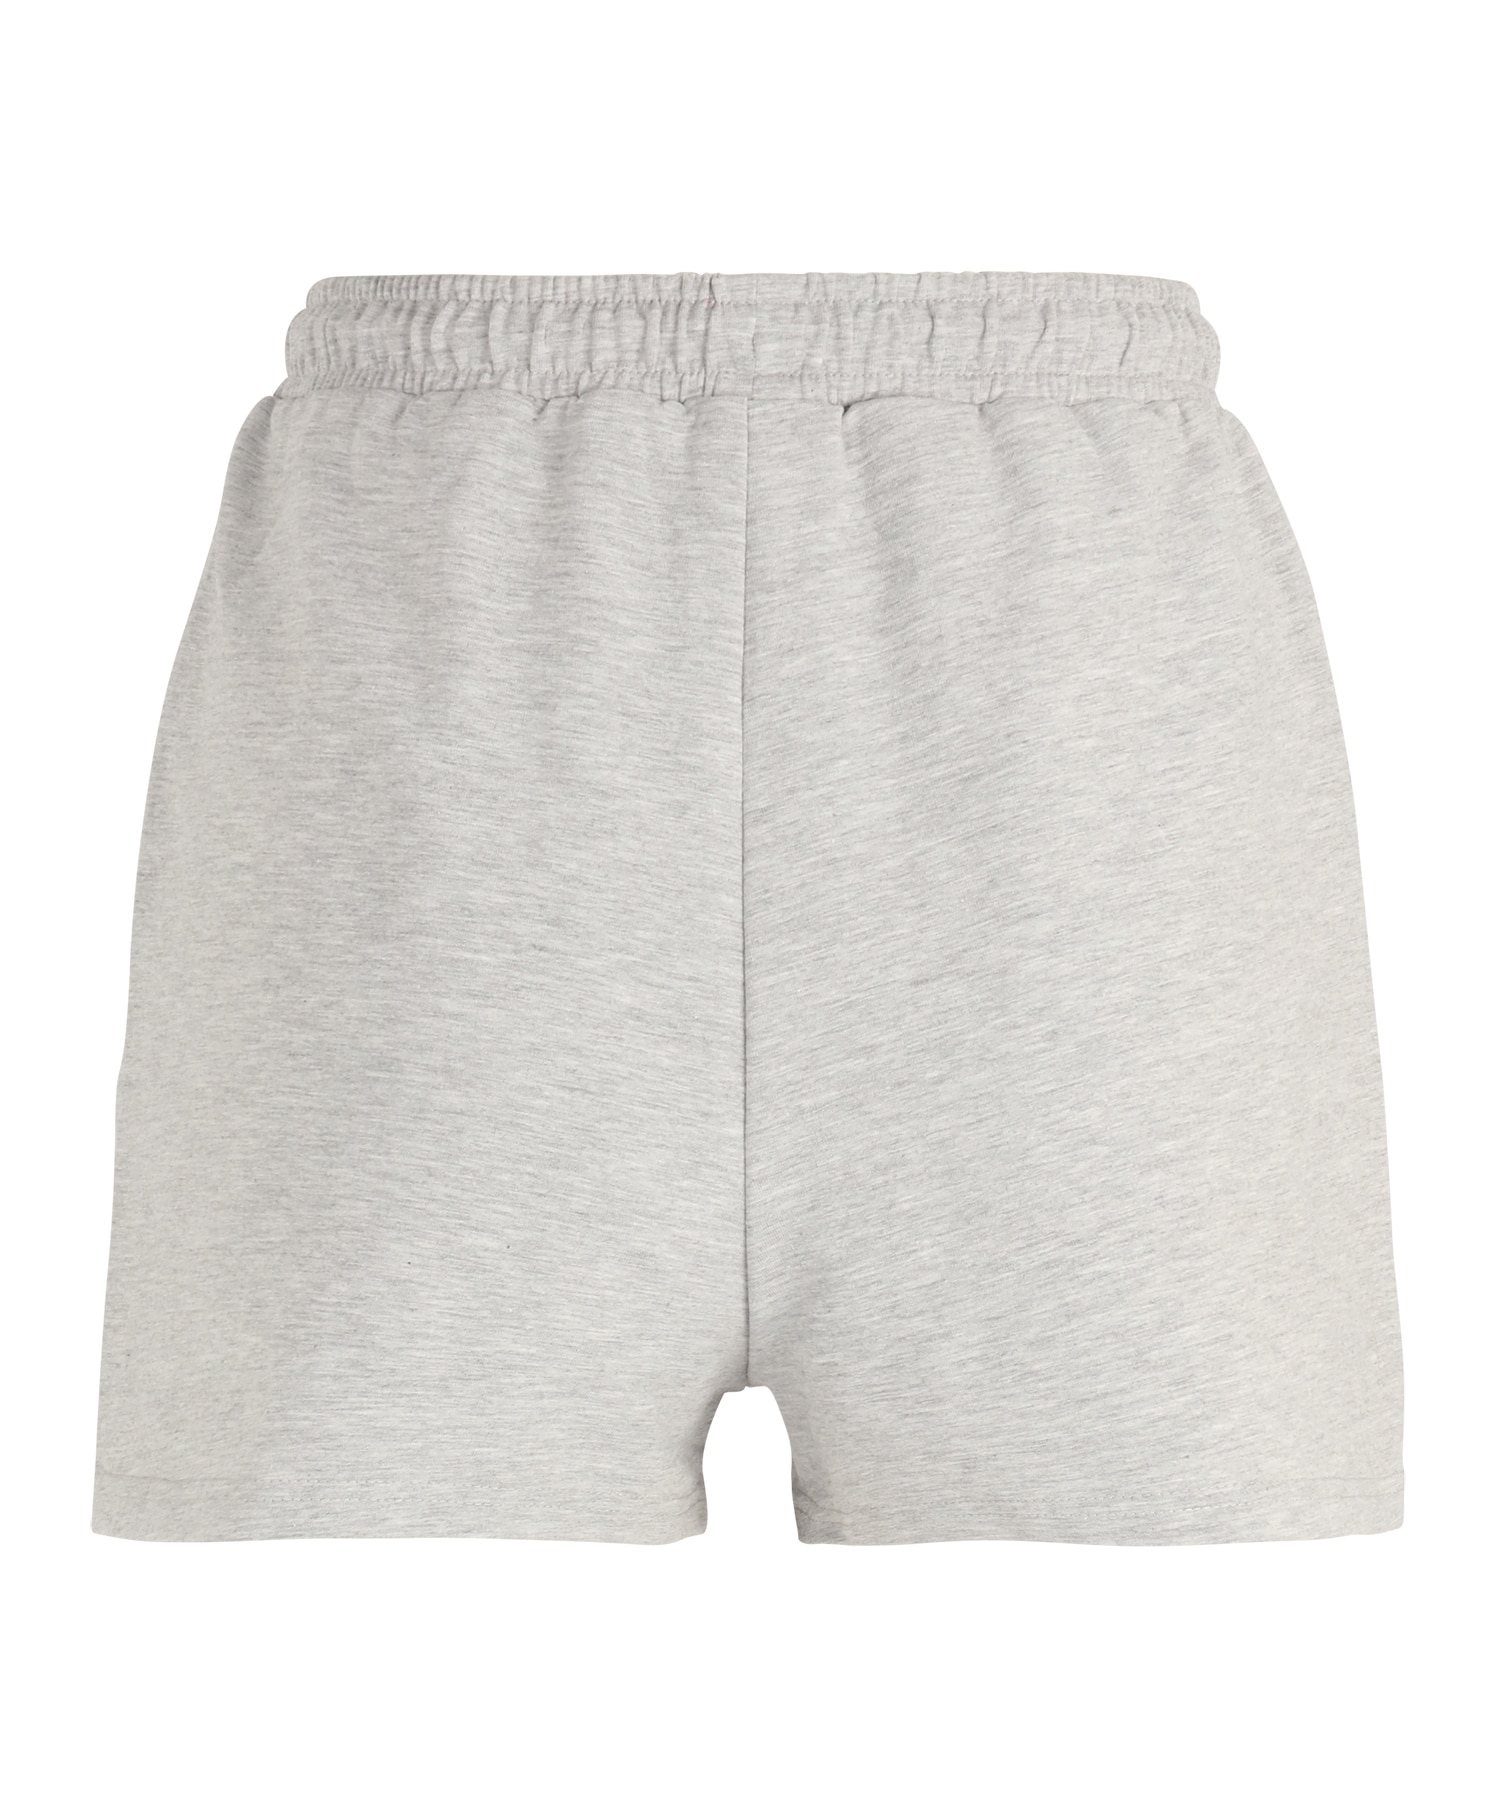 Fila BRANDENBURG high waist shorts